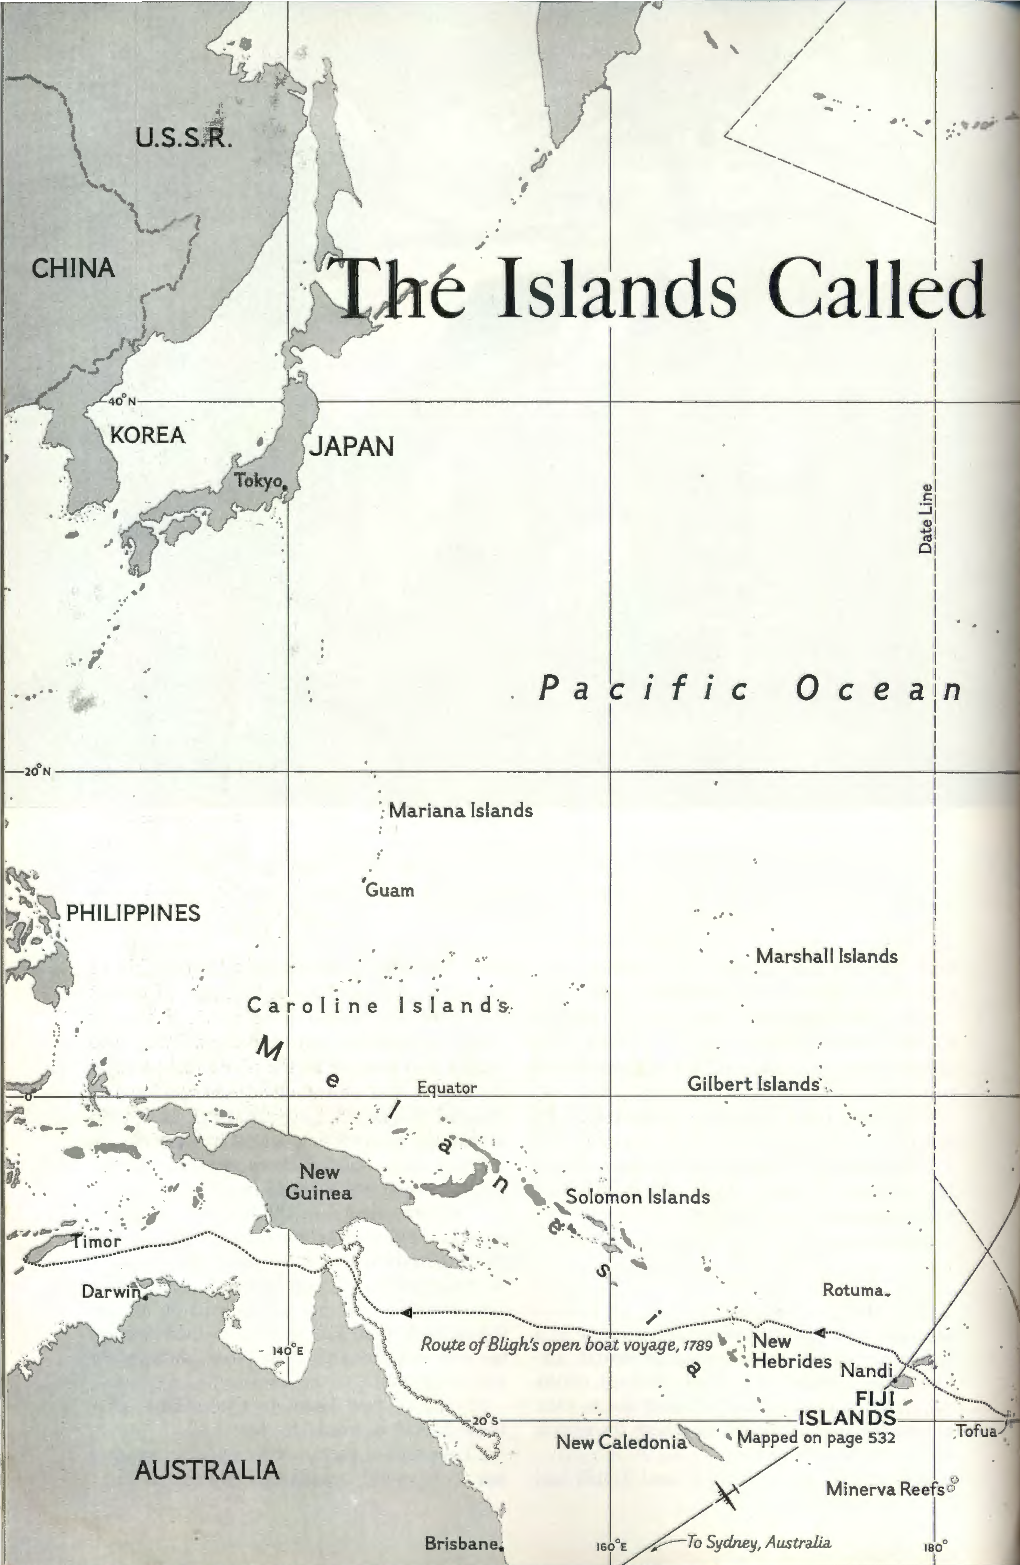 The Islands Called Fiji